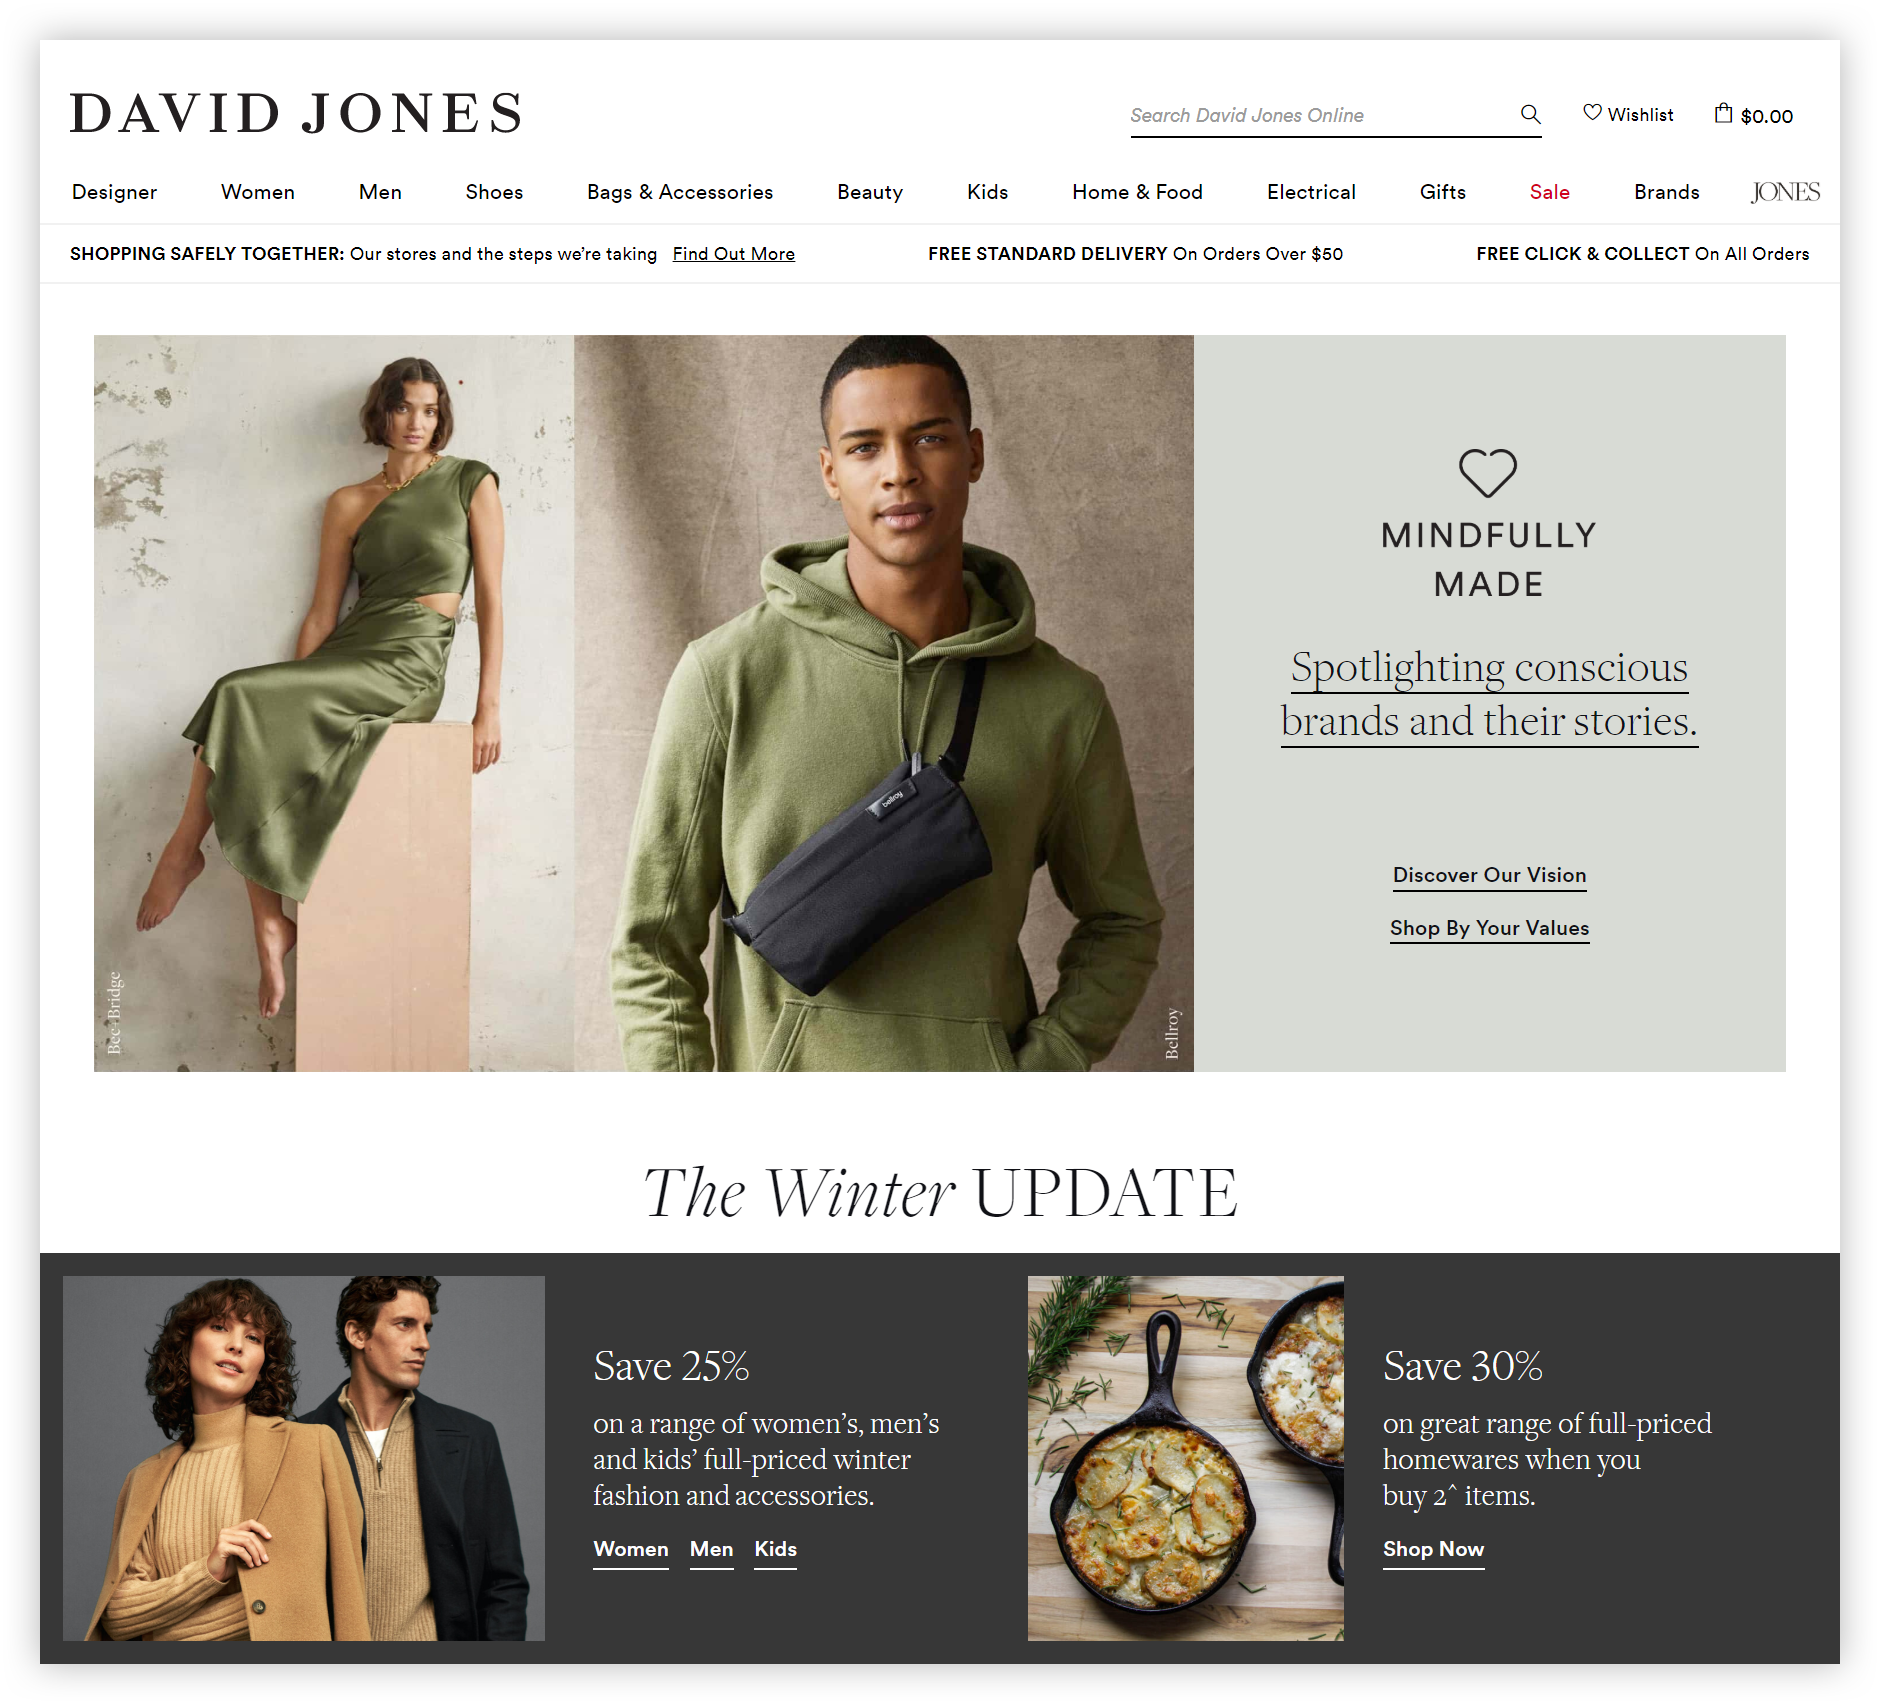 DAVID JONES Bags, Accessories - Fast delivery